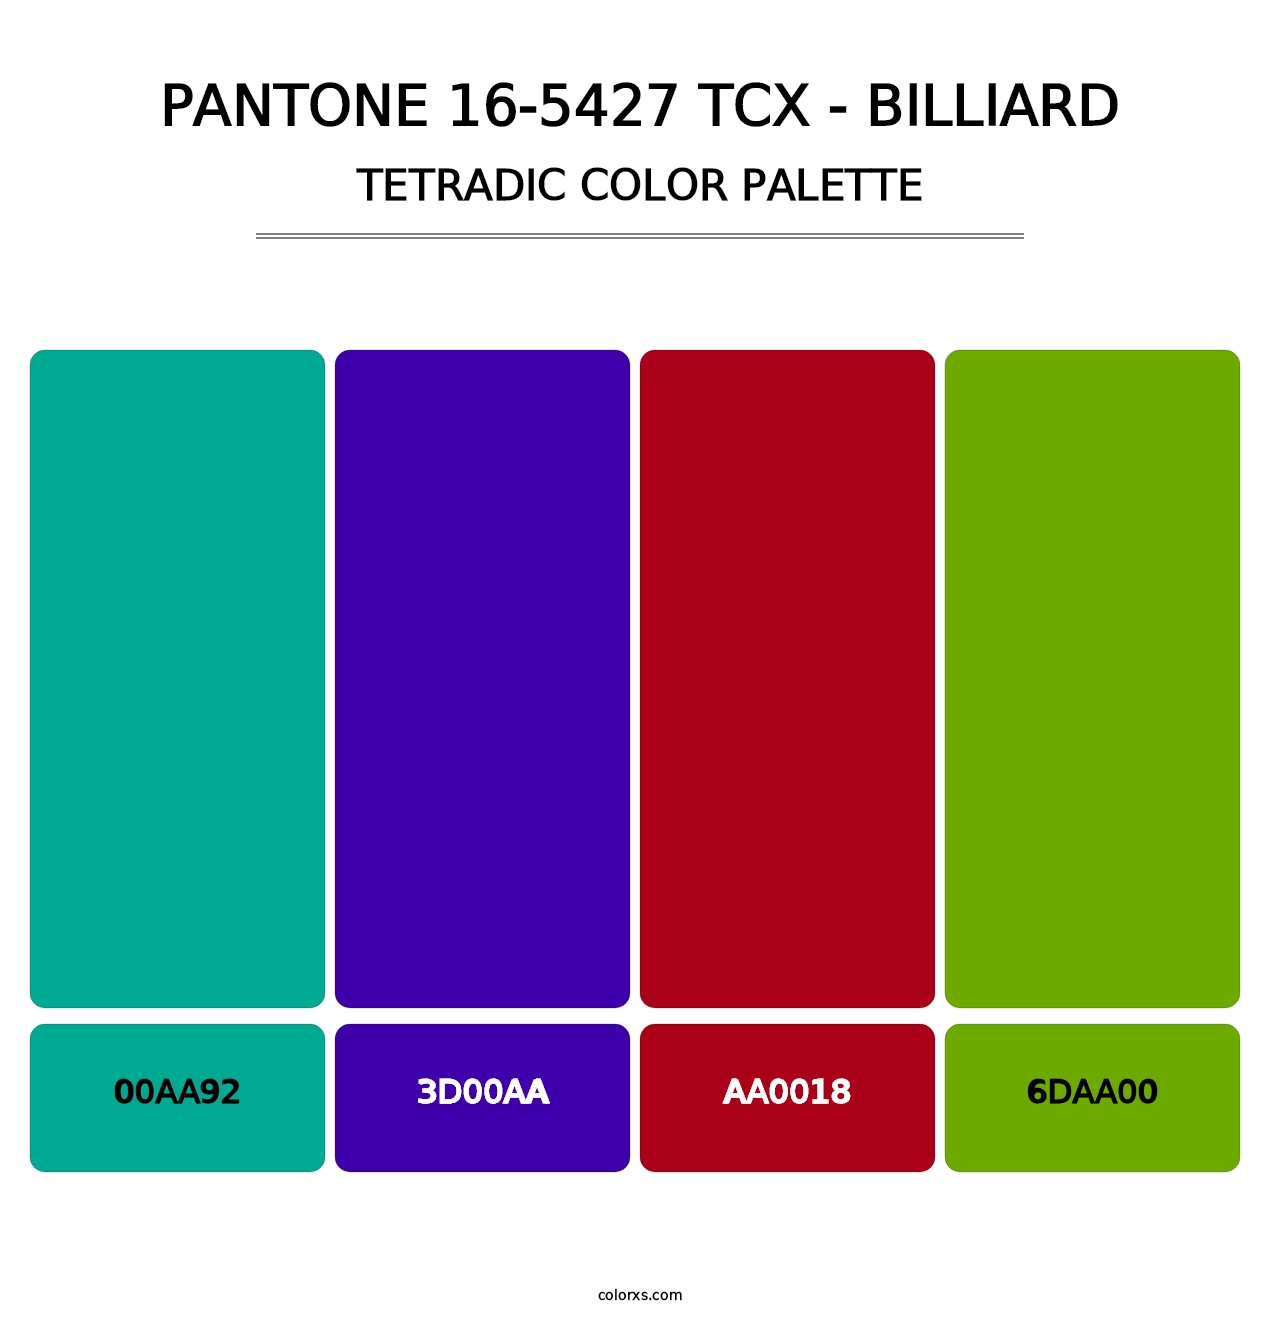 PANTONE 16-5427 TCX - Billiard - Tetradic Color Palette